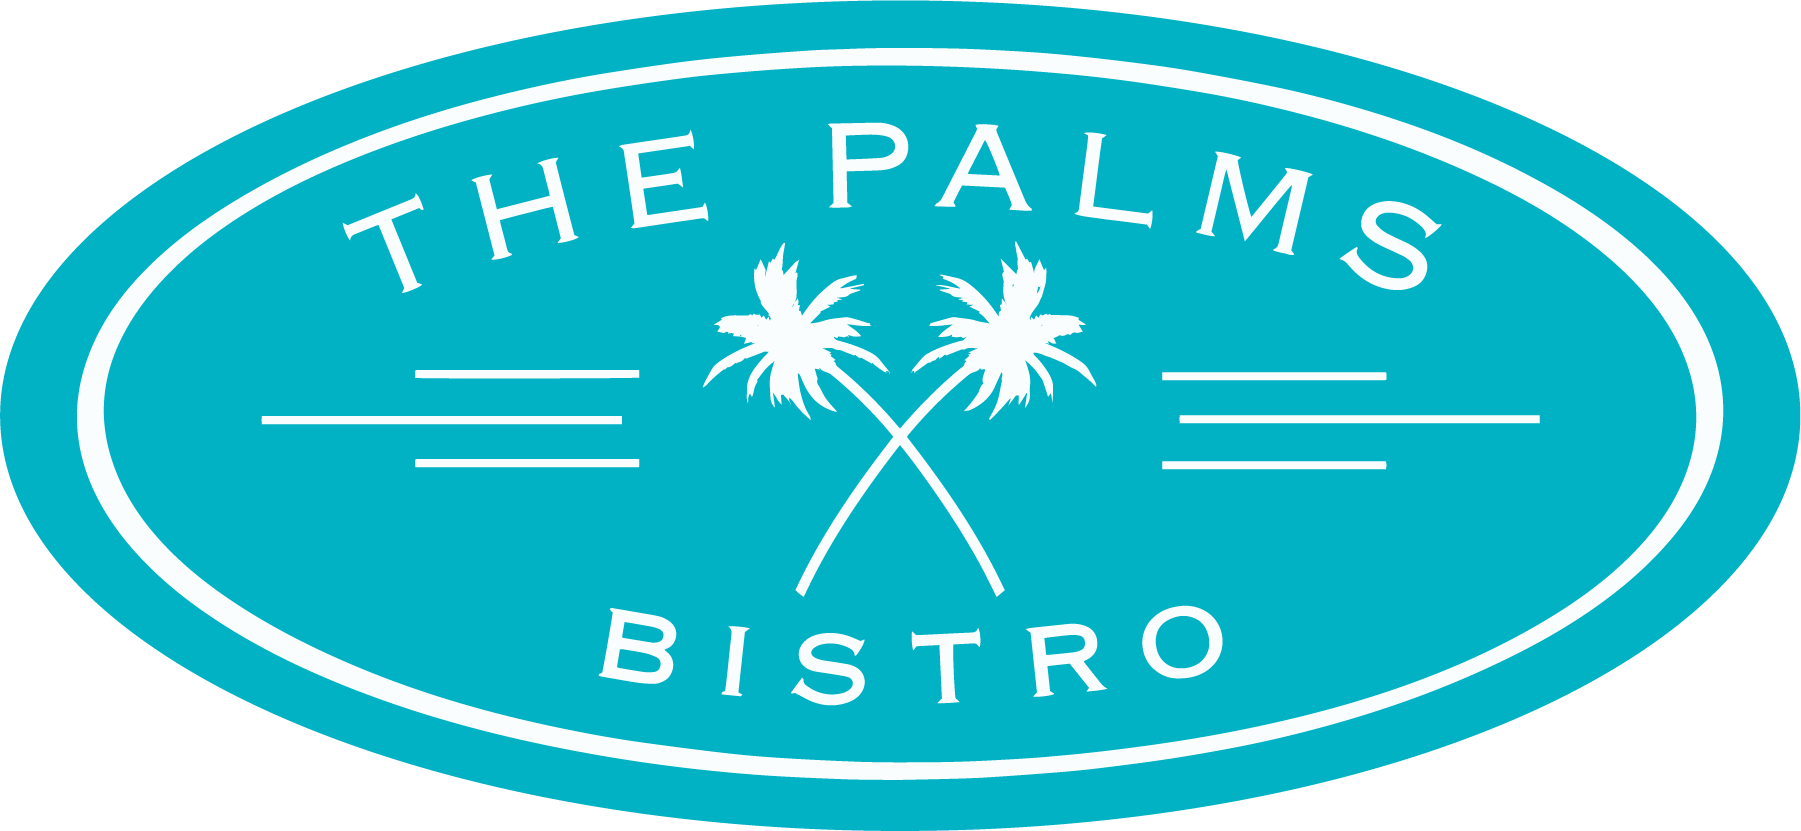 The Palms Bistro logo